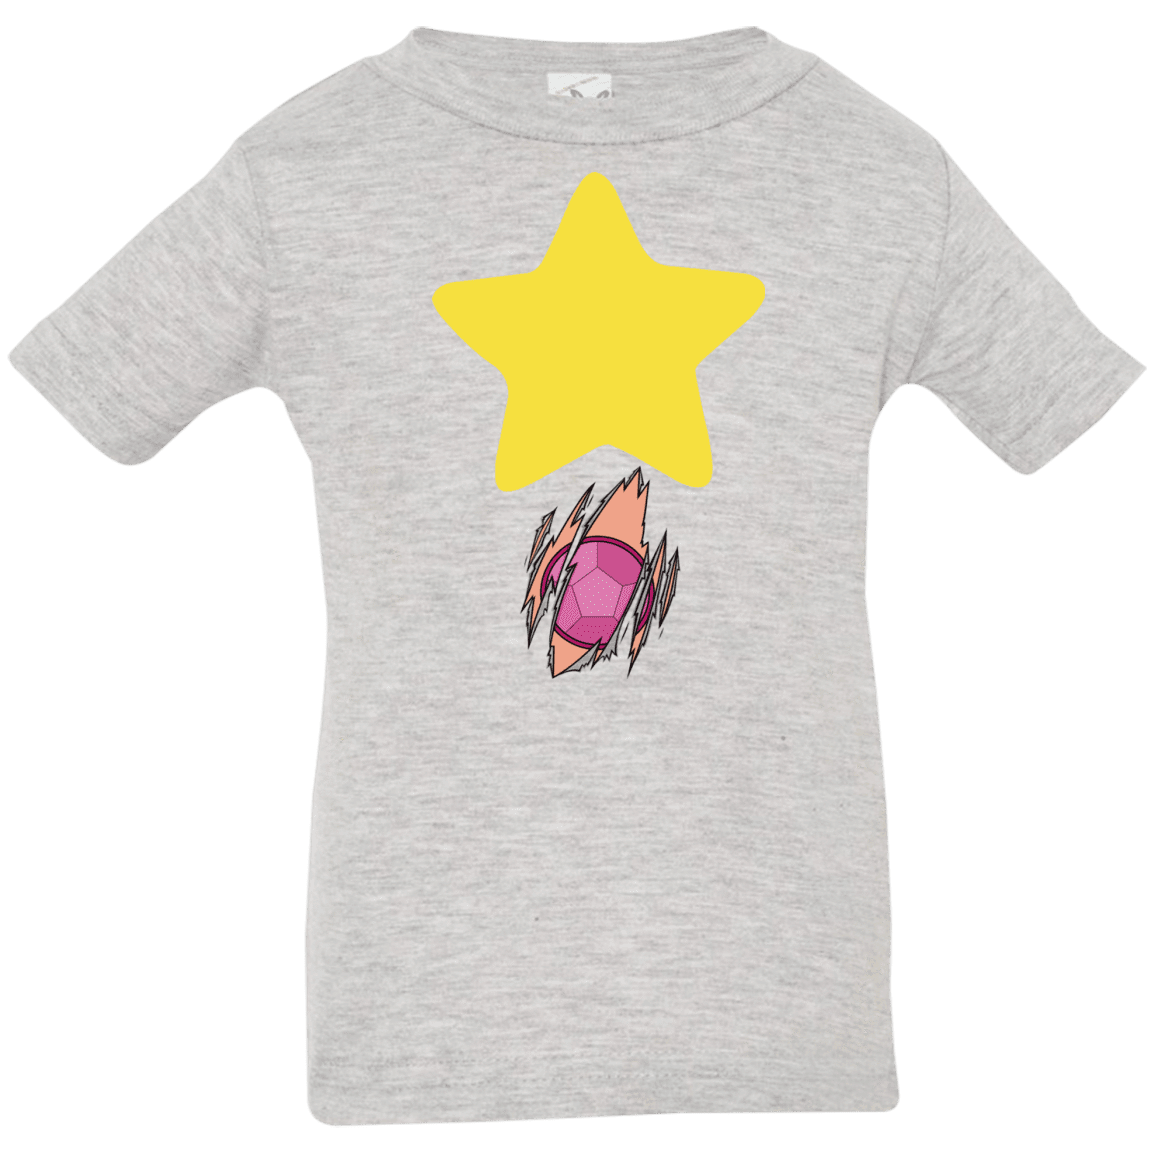 T-Shirts Heather Grey / 6 Months Be like Steven Infant Premium T-Shirt